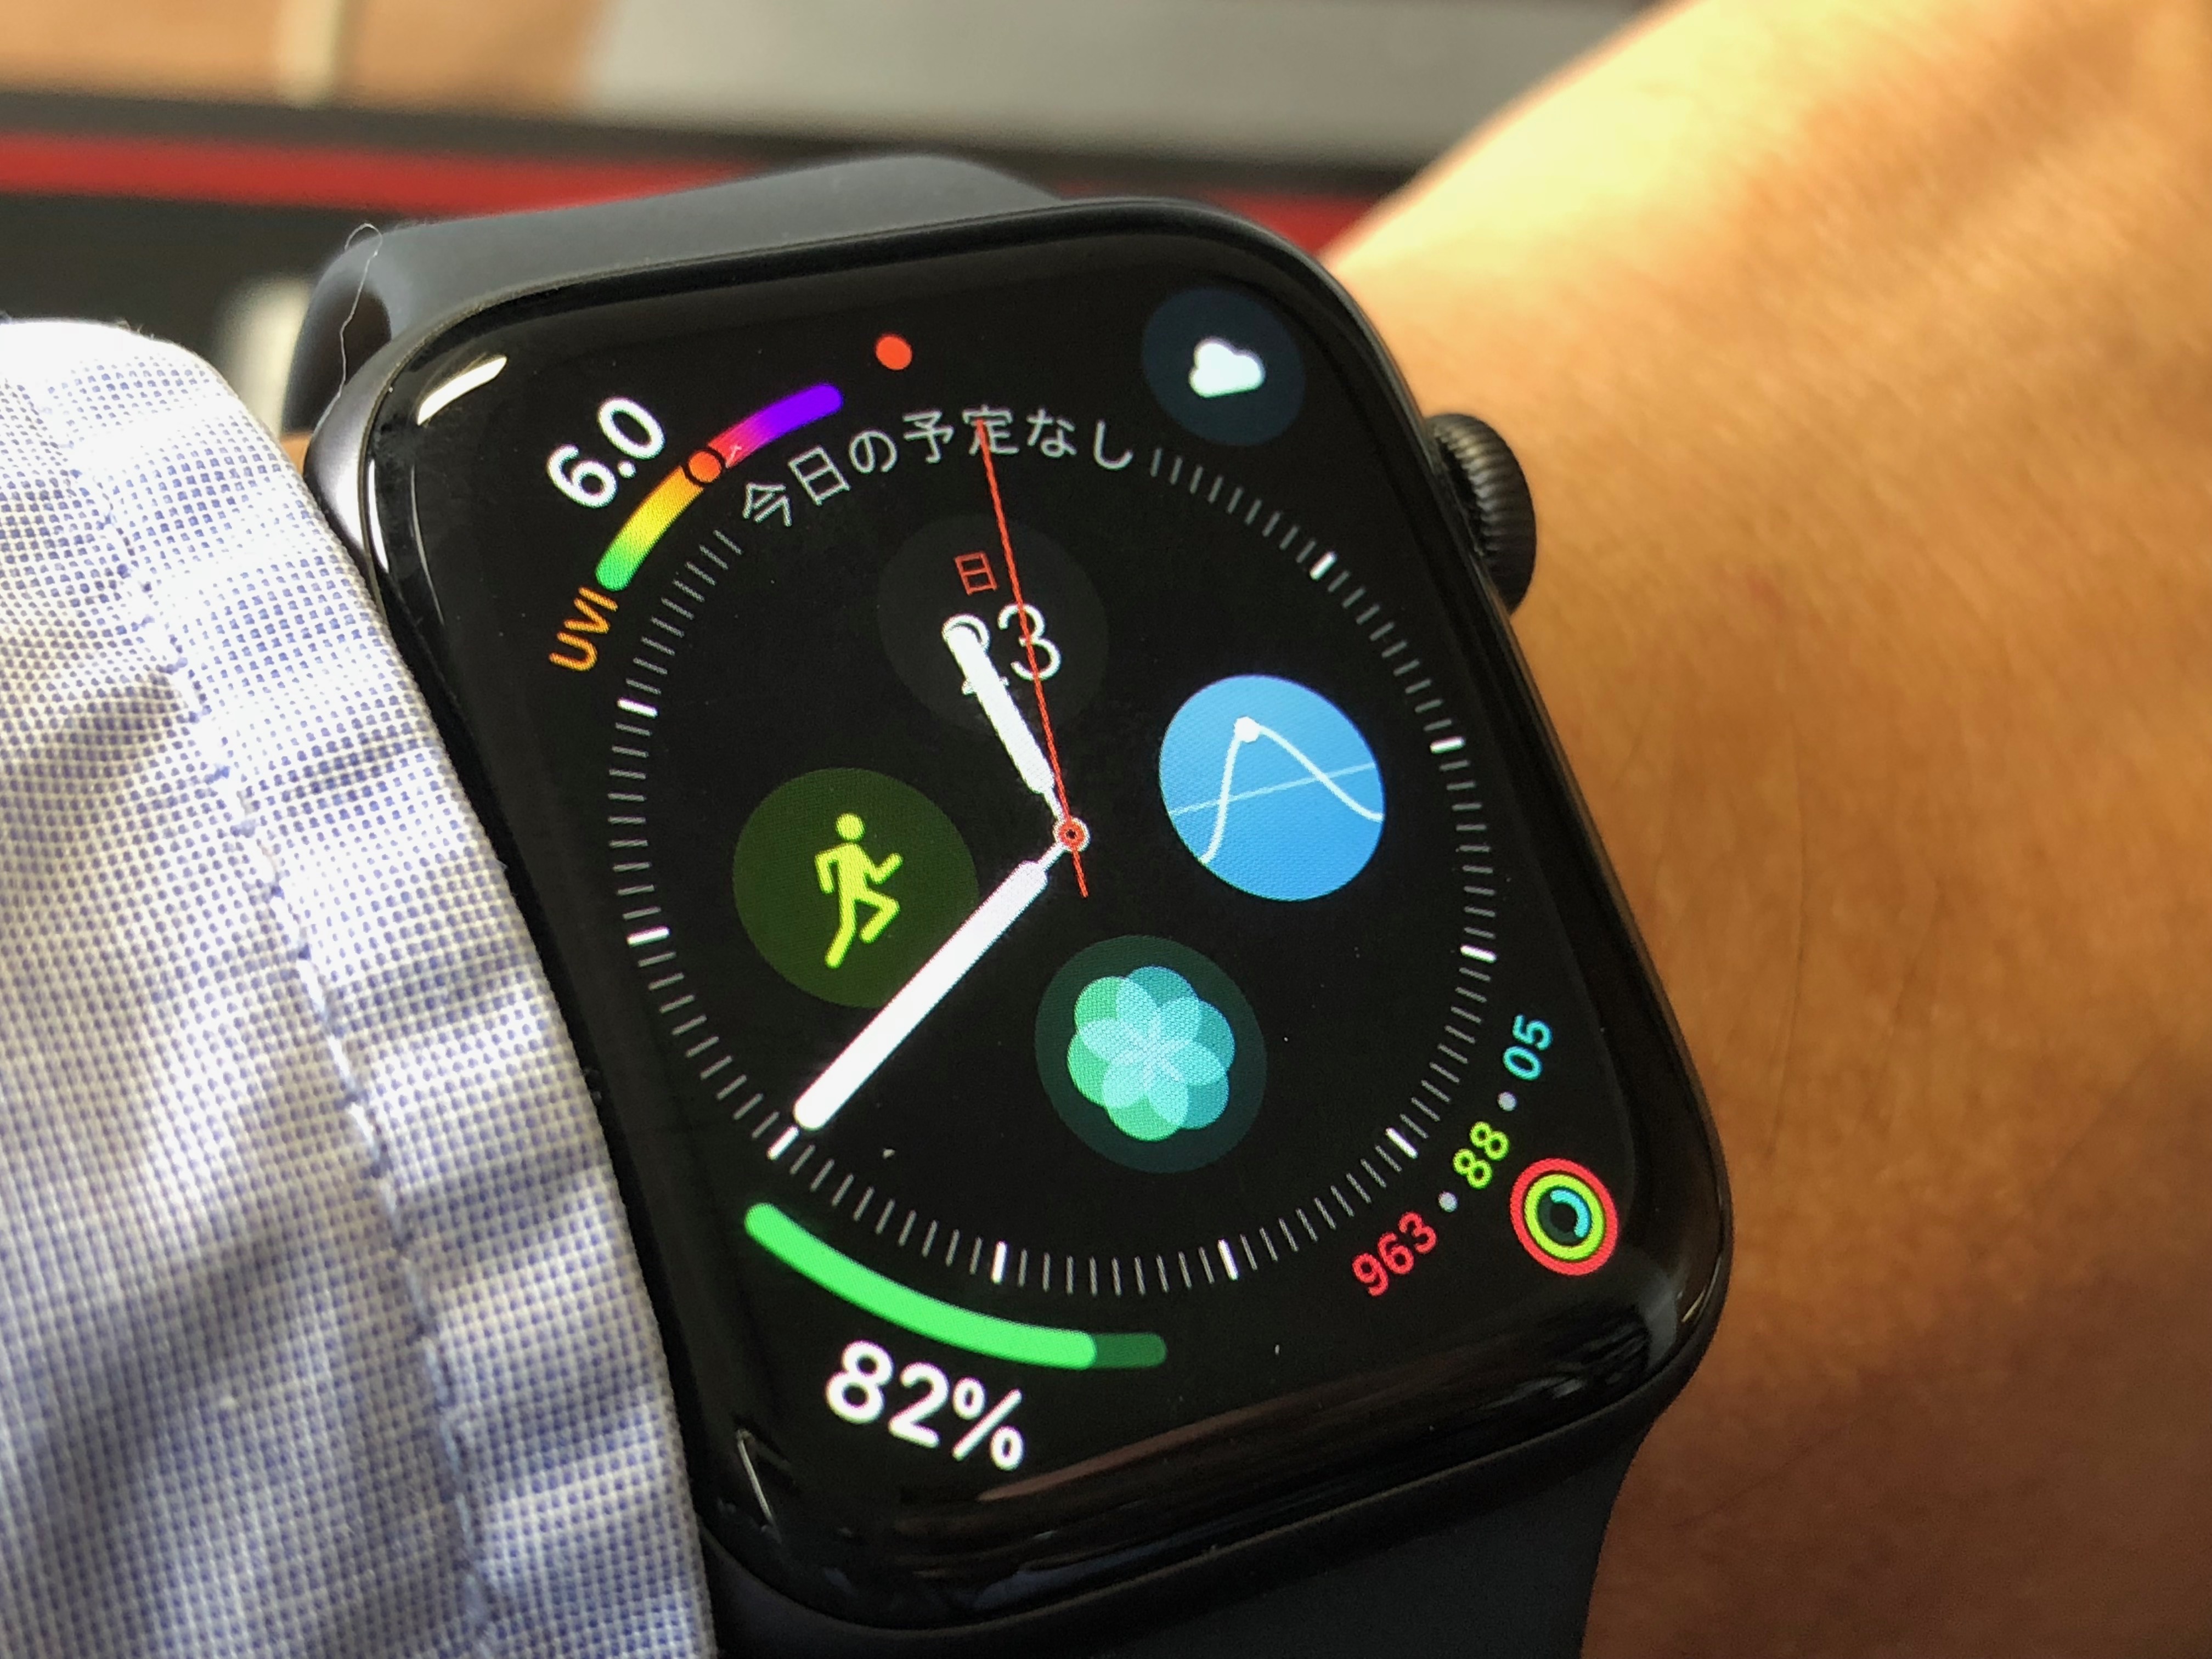 [Apple Watch]新型「Apple Watch Series 4」を装着しランニング時に感じたこと